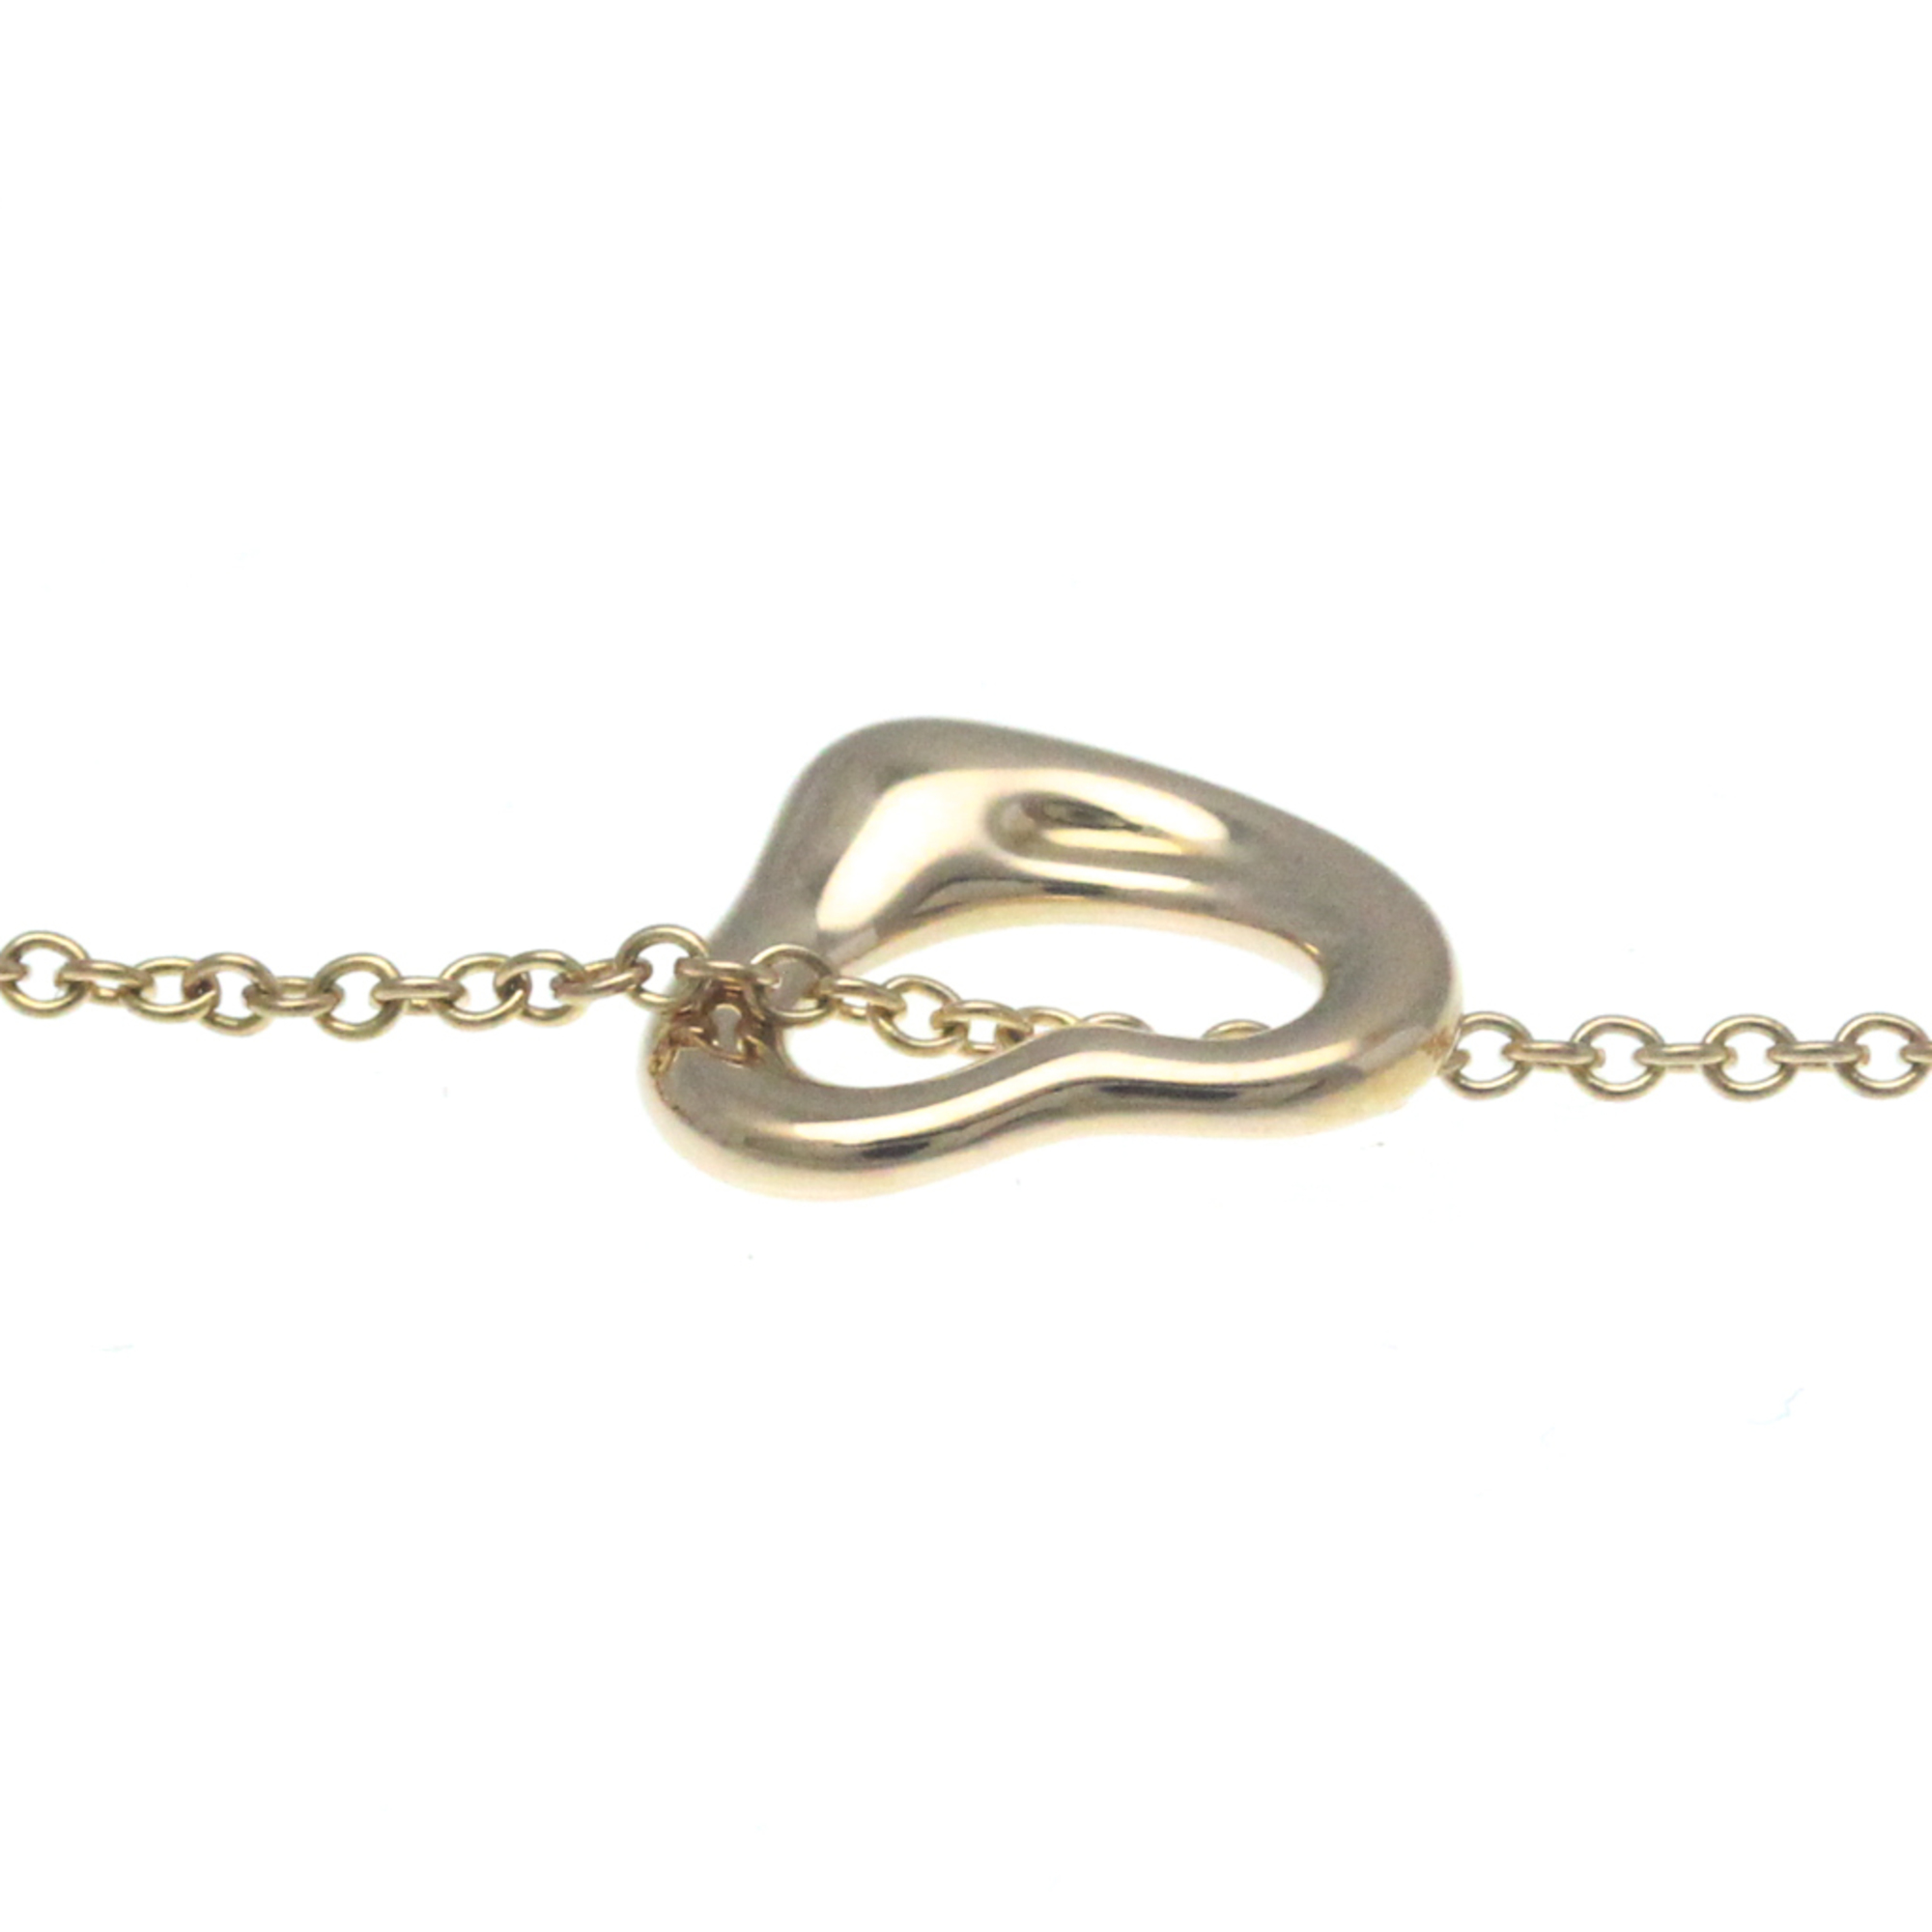 Tiffany Open Heart Pink Gold (18K) No Stone Women's Fashion Pendant Necklace